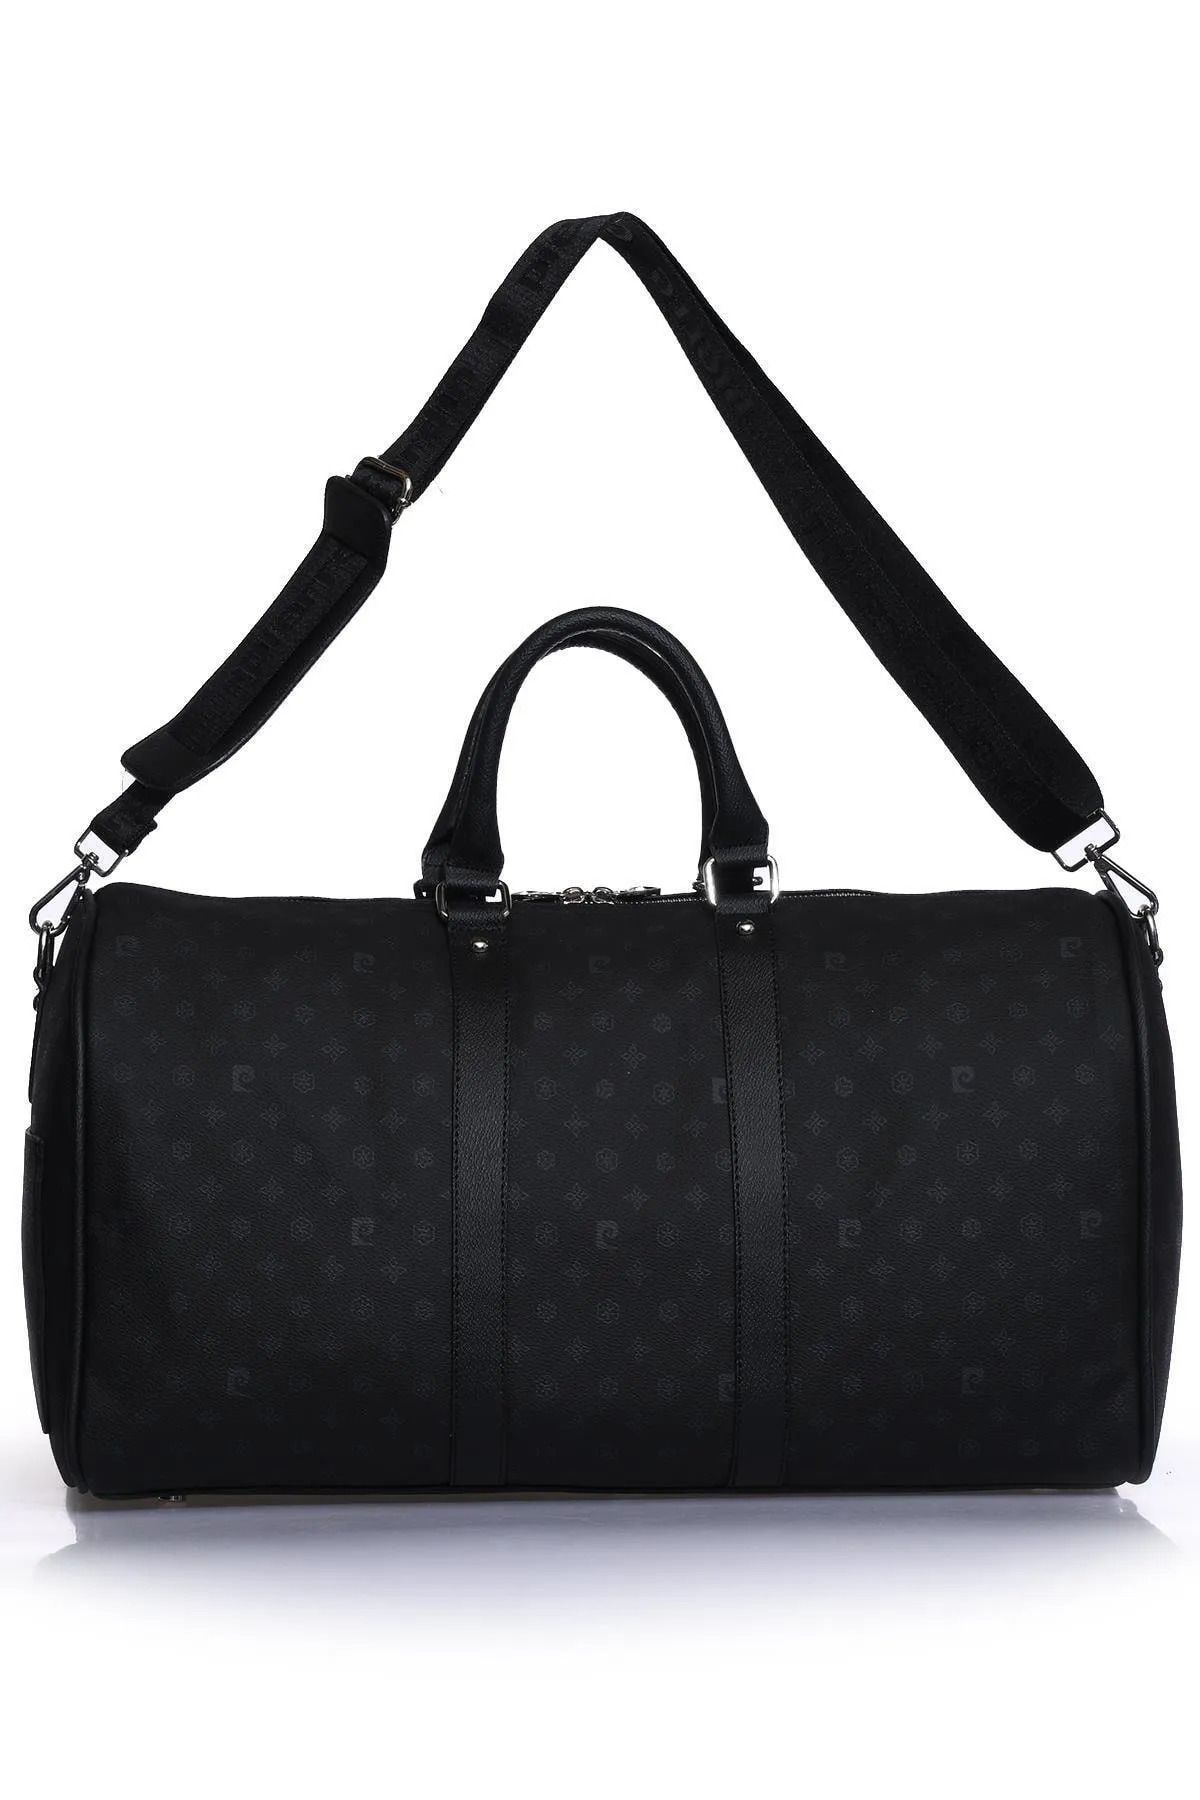 Pierre Cardin چمدان دستی و کیف ورزشی سیاه سفید